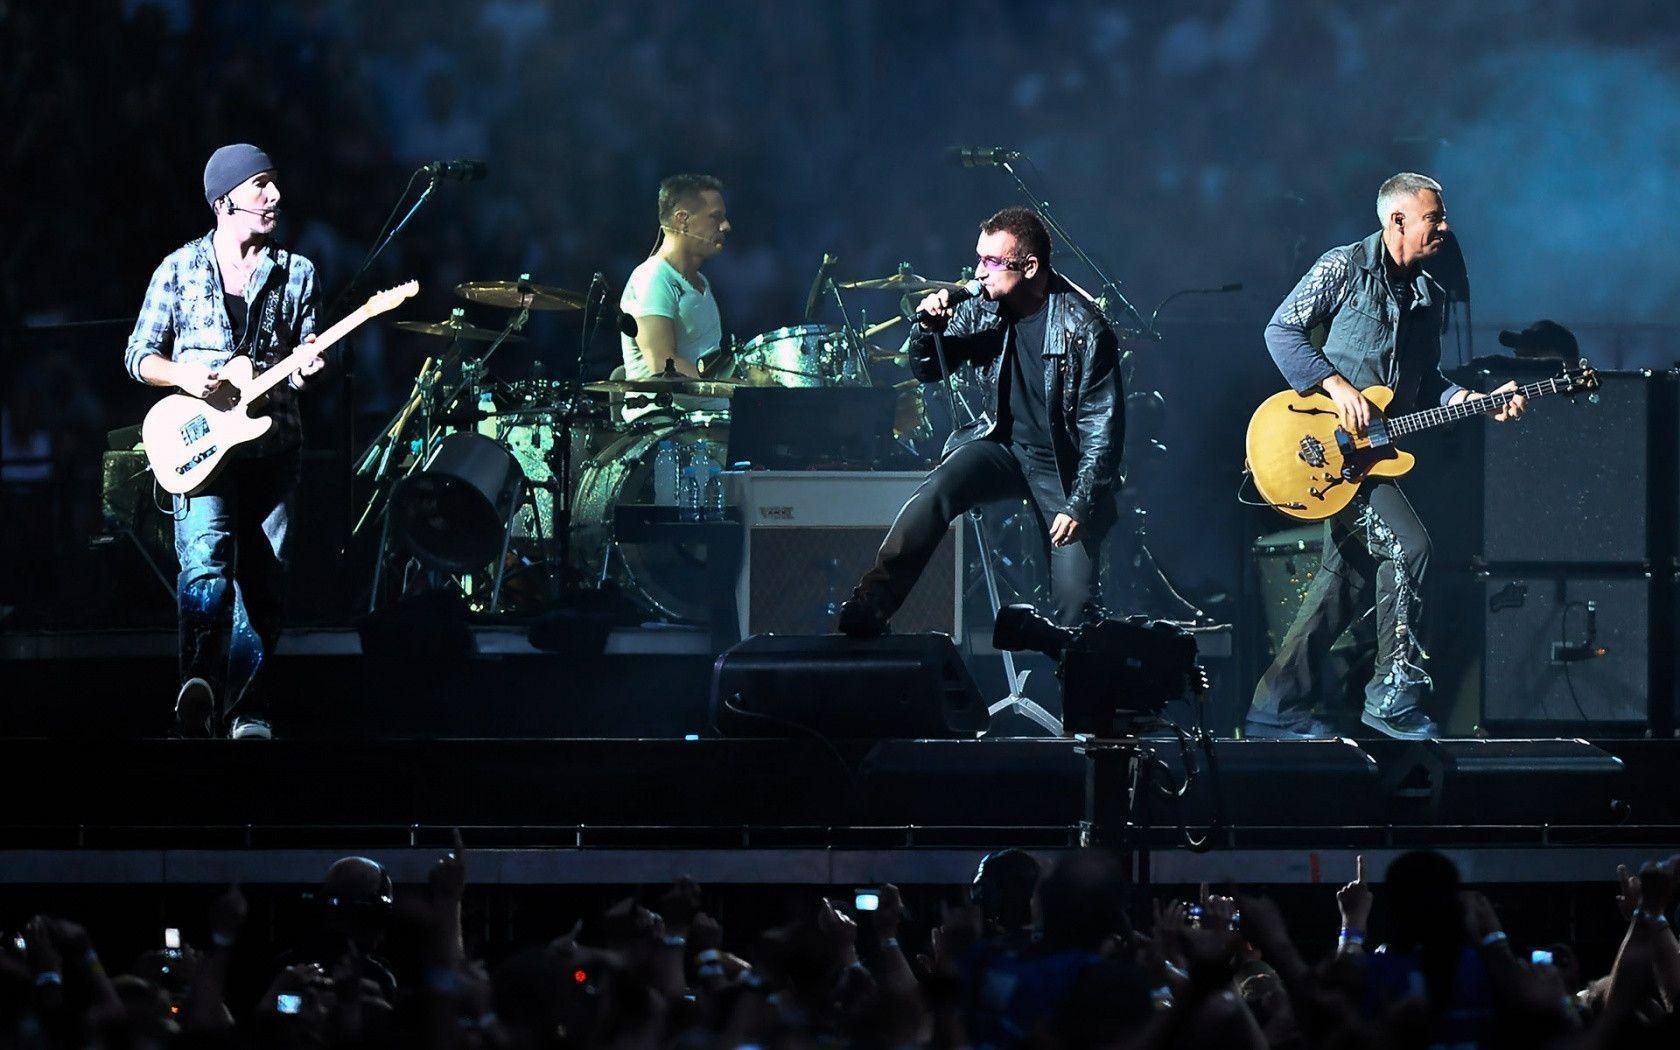 U2 Concert wallpaper, music and dance wallpaper